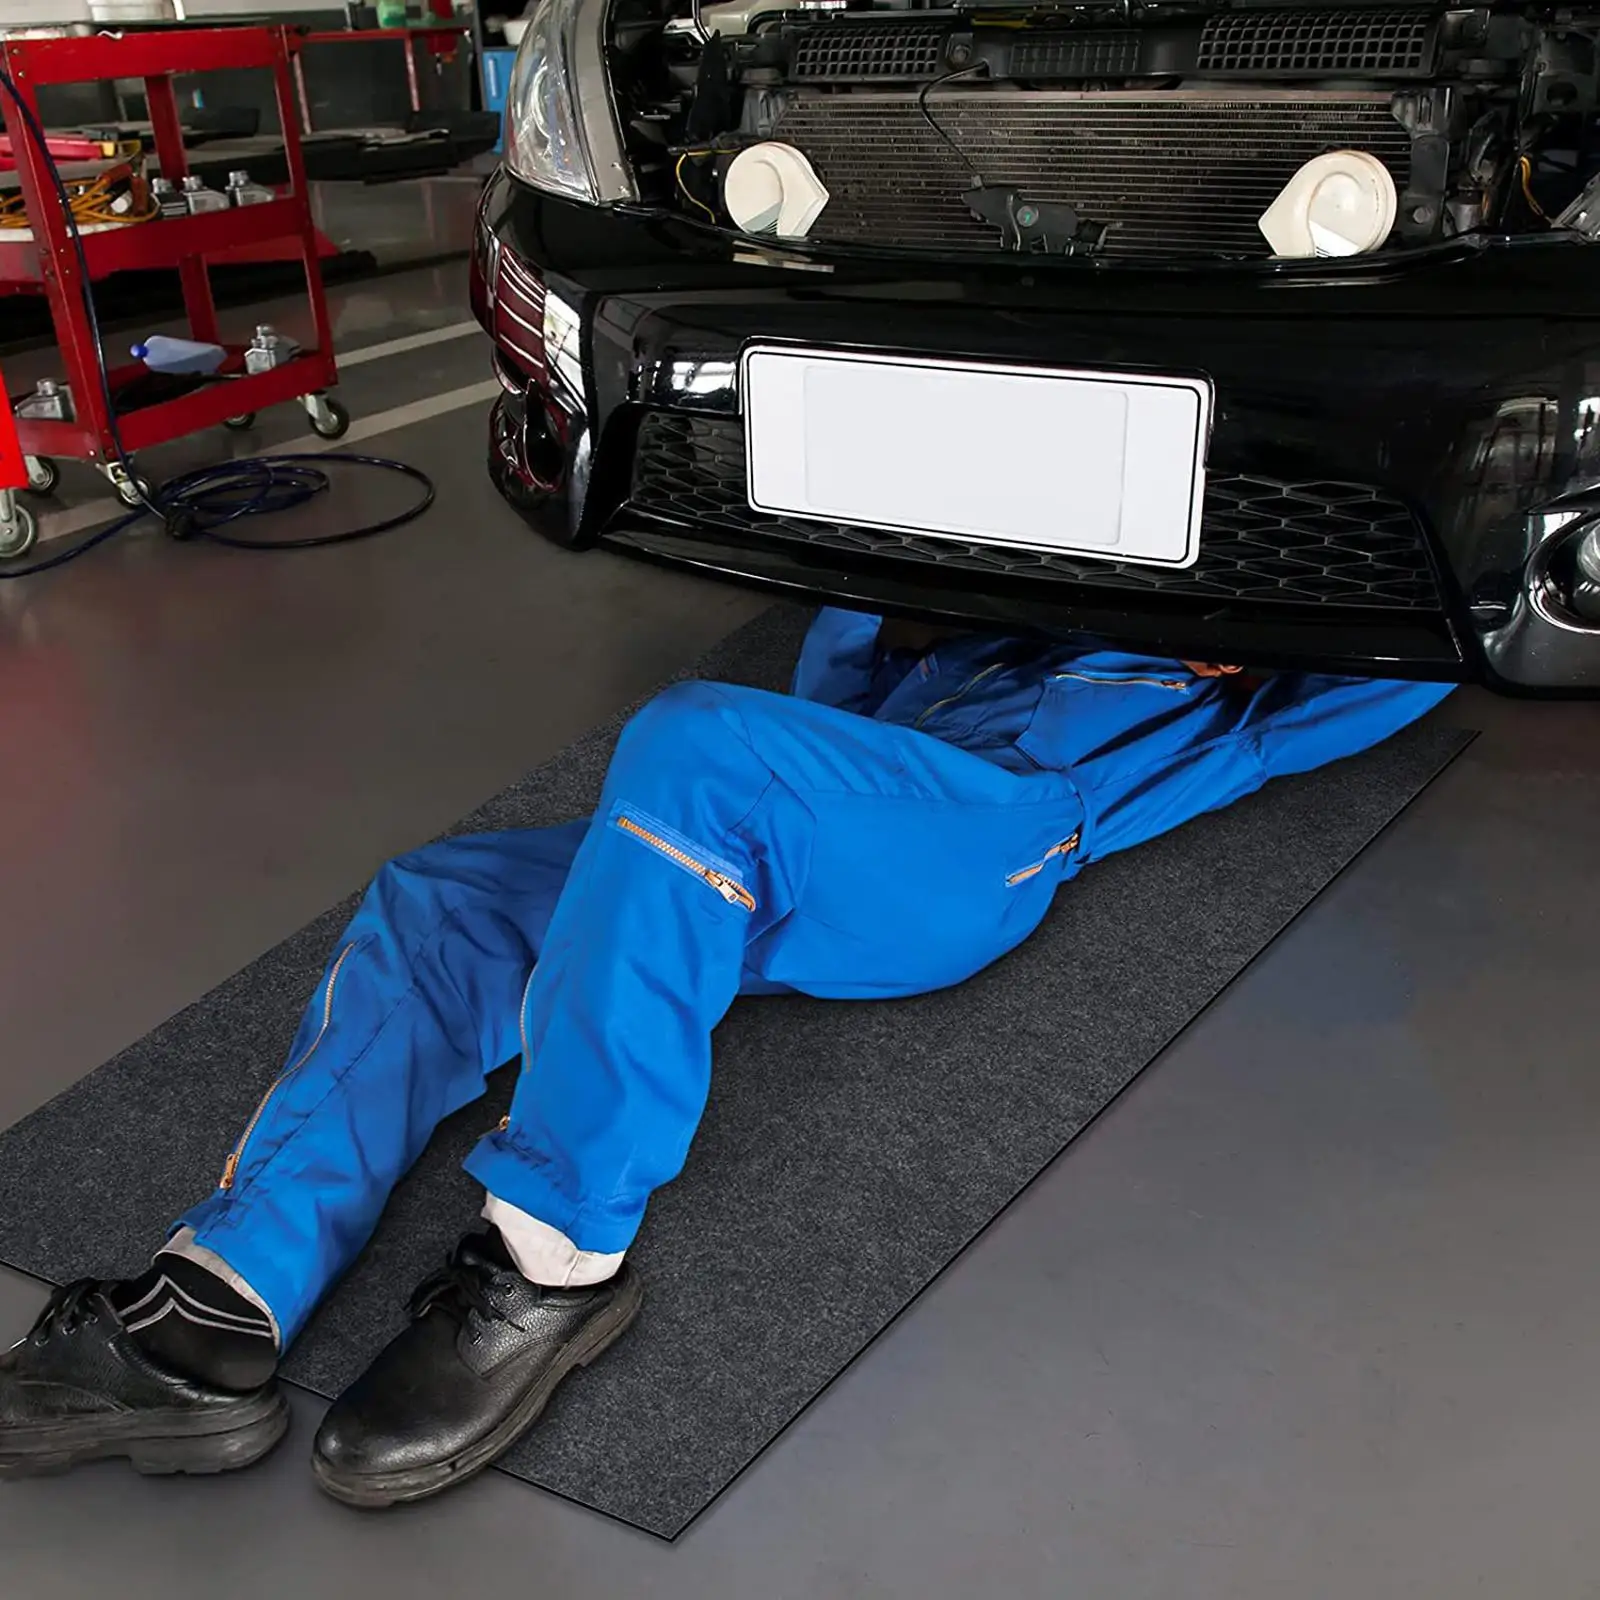 https://ae01.alicdn.com/kf/Seefdcf41a9cd4512a25ffa9be089eecb7/Felt-Maintenance-Mat-for-under-Car-Oil-Spill-Mat-to-Protect-Driveway-Surface-Garage-or-Shop.jpg